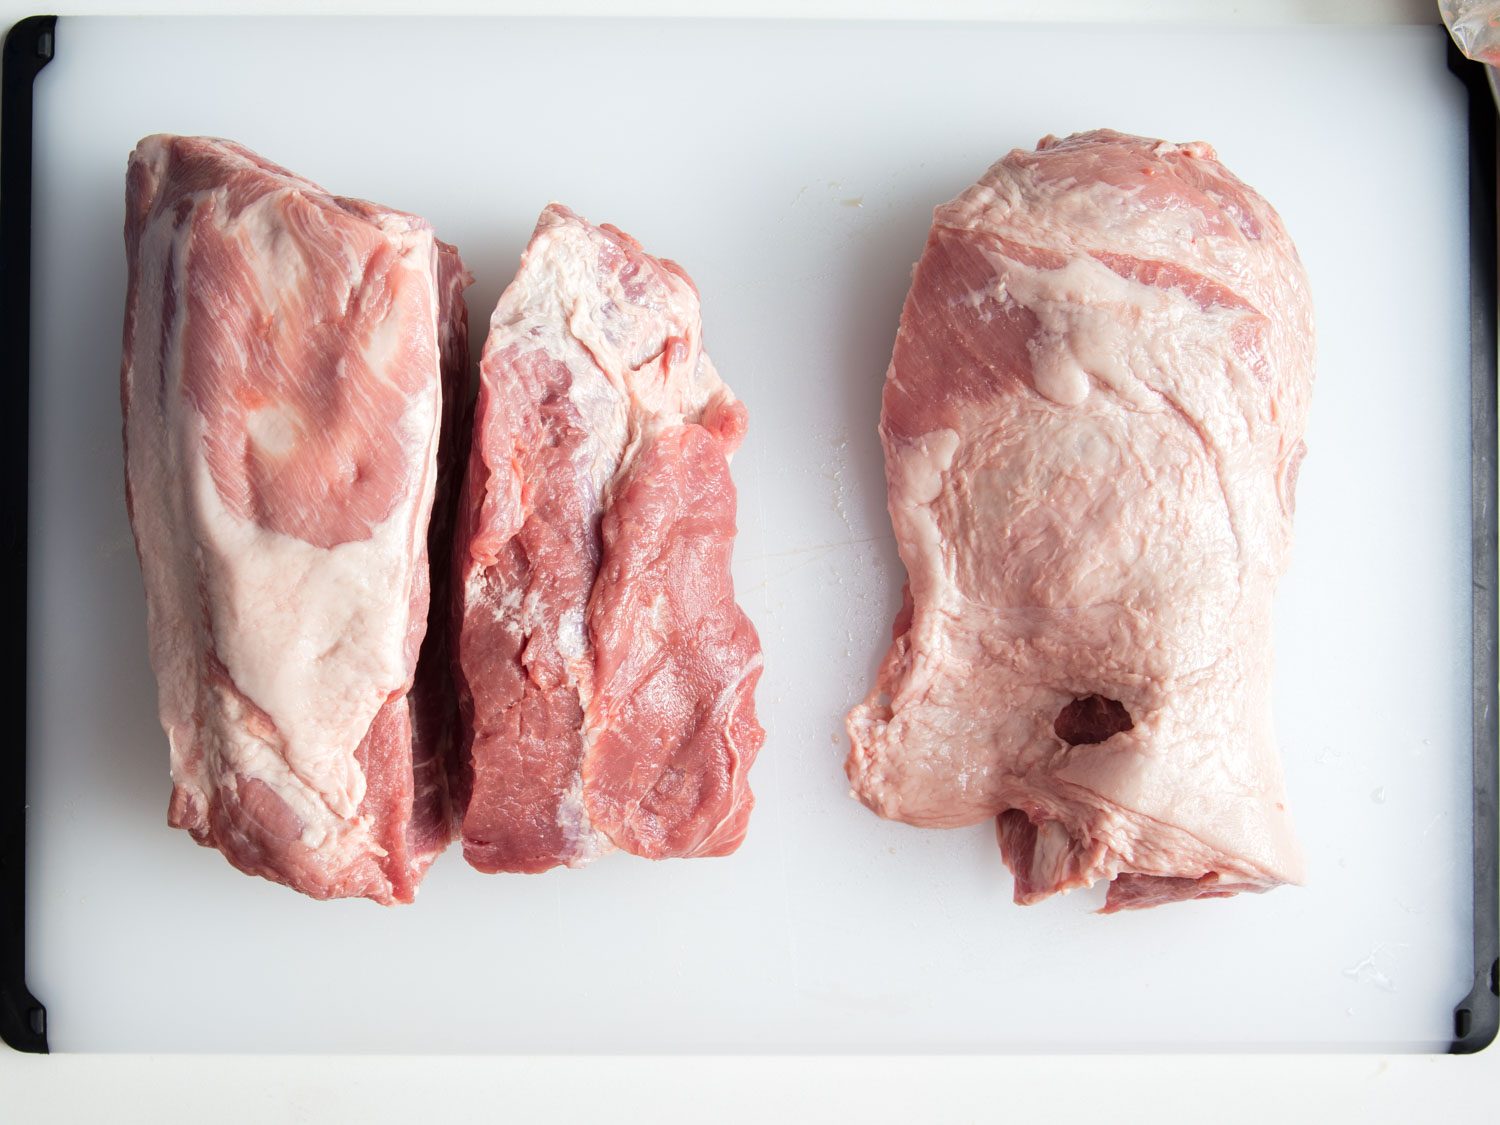 Overhead view of boneless skinless pork shoulder cut into roasts